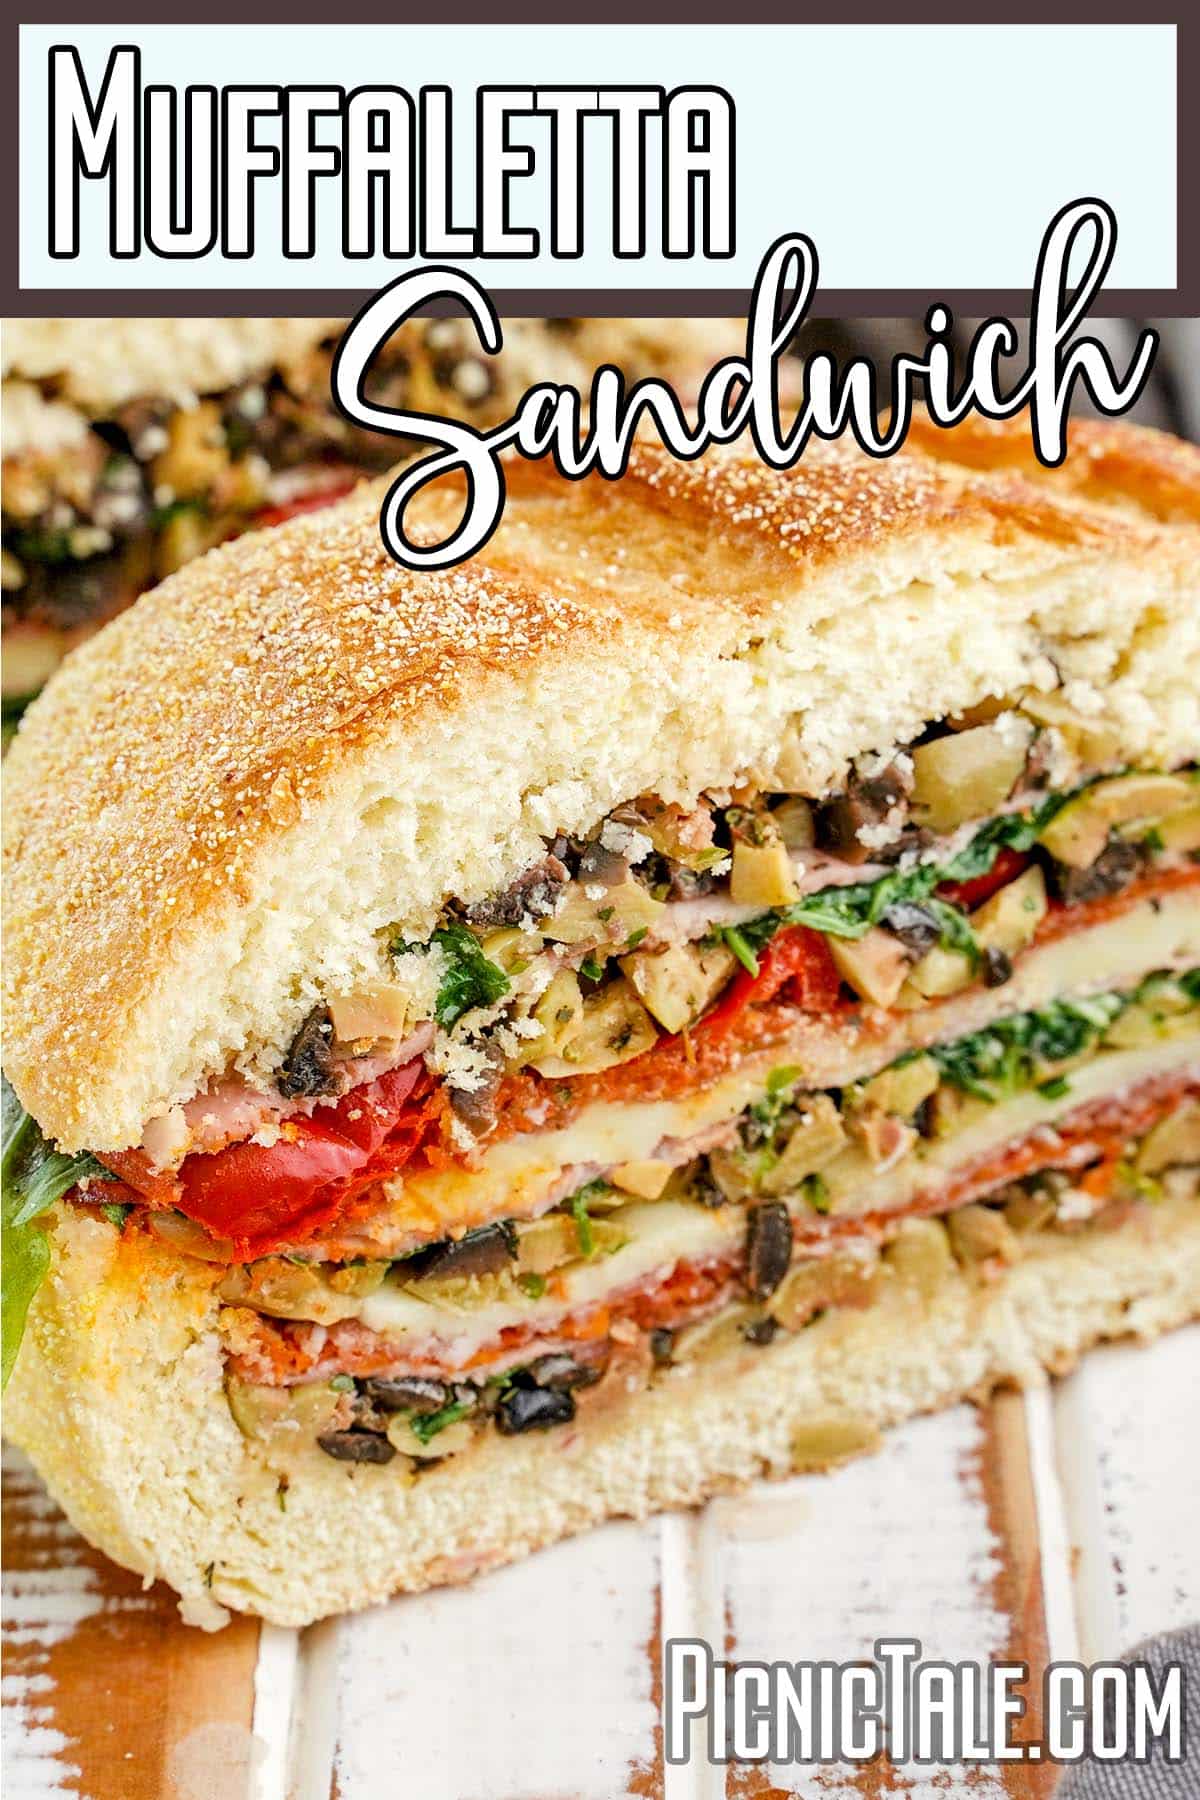 Muffaletta Sandwich, wording on top.